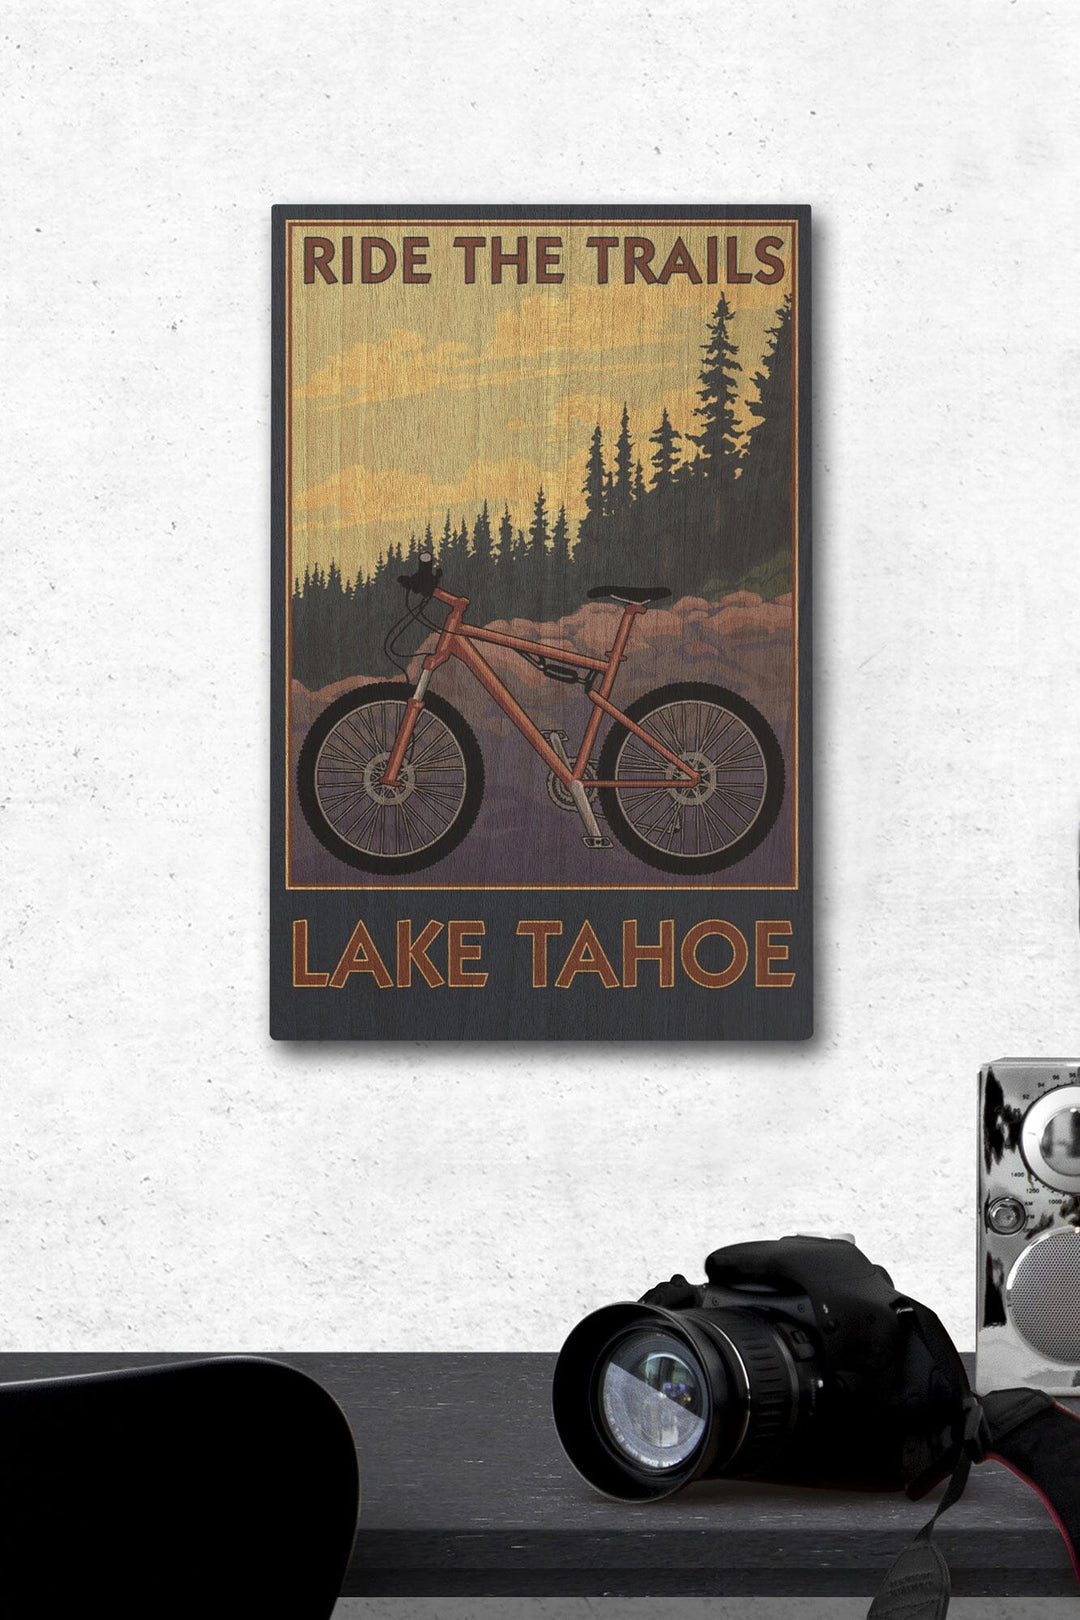 Lake Tahoe, California, Ride the Trails, Lantern Press Artwork, Wood Signs and Postcards Wood Lantern Press 12 x 18 Wood Gallery Print 